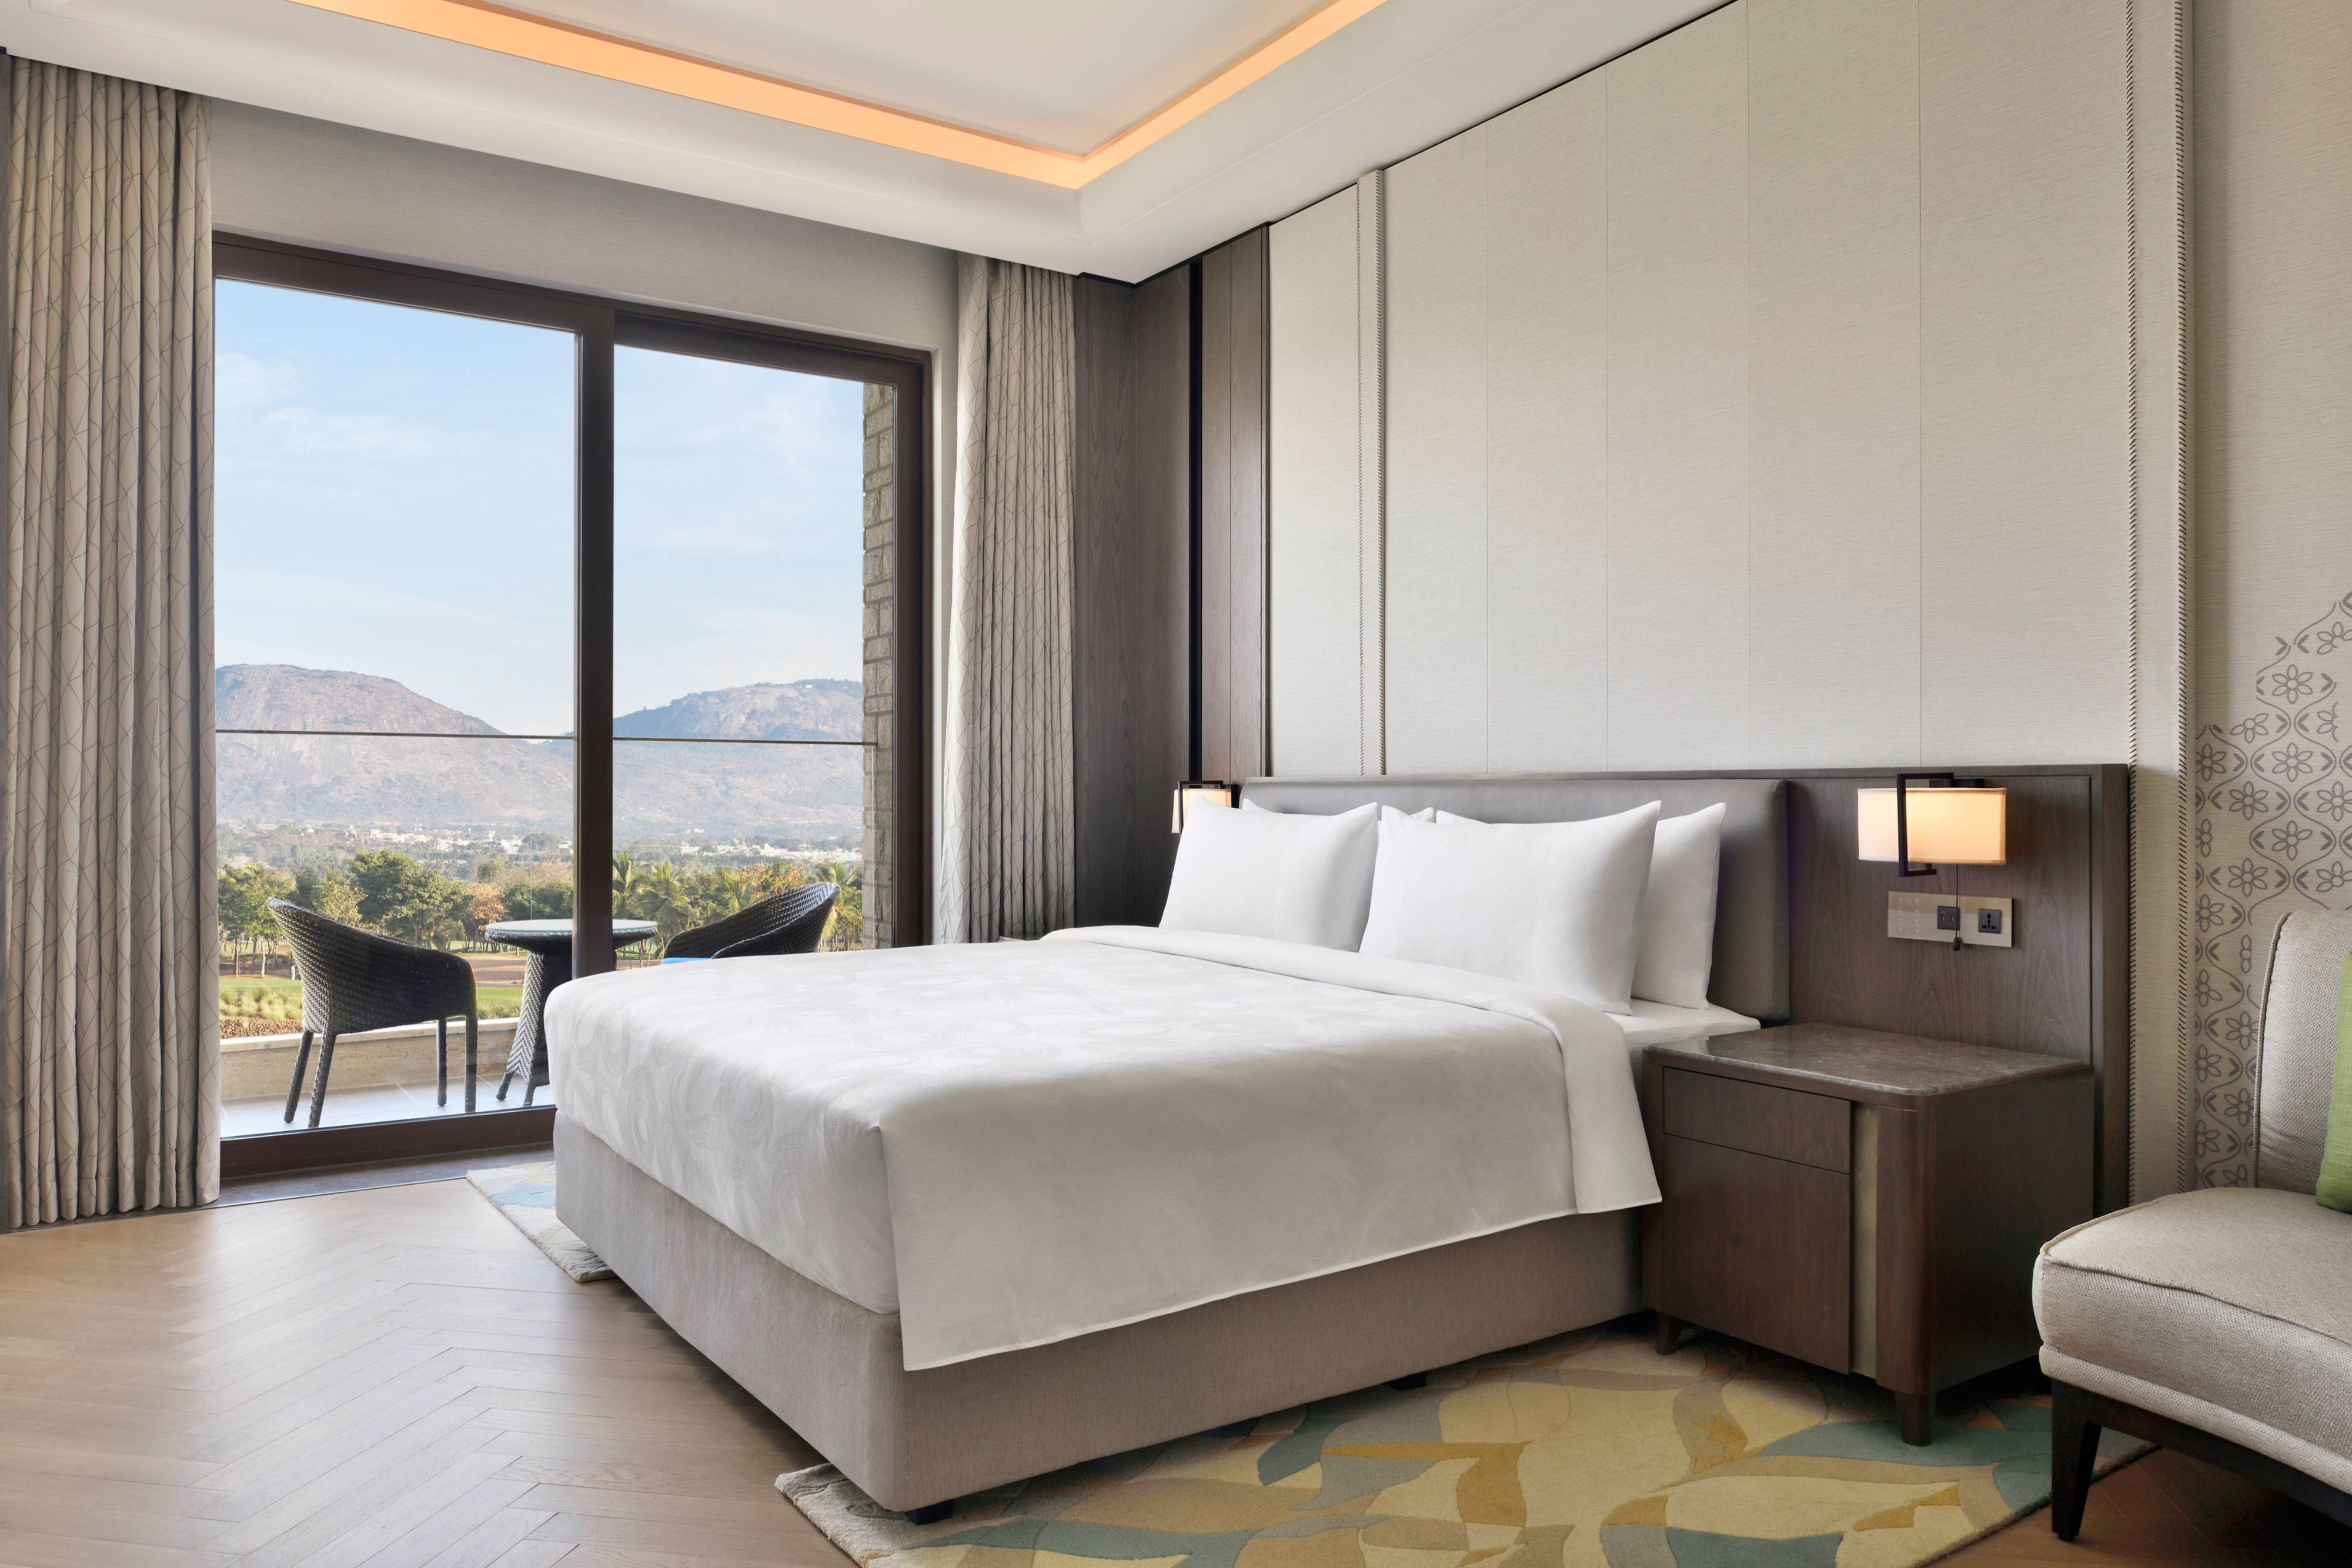 Luxury Suite Bedroom with Golf view